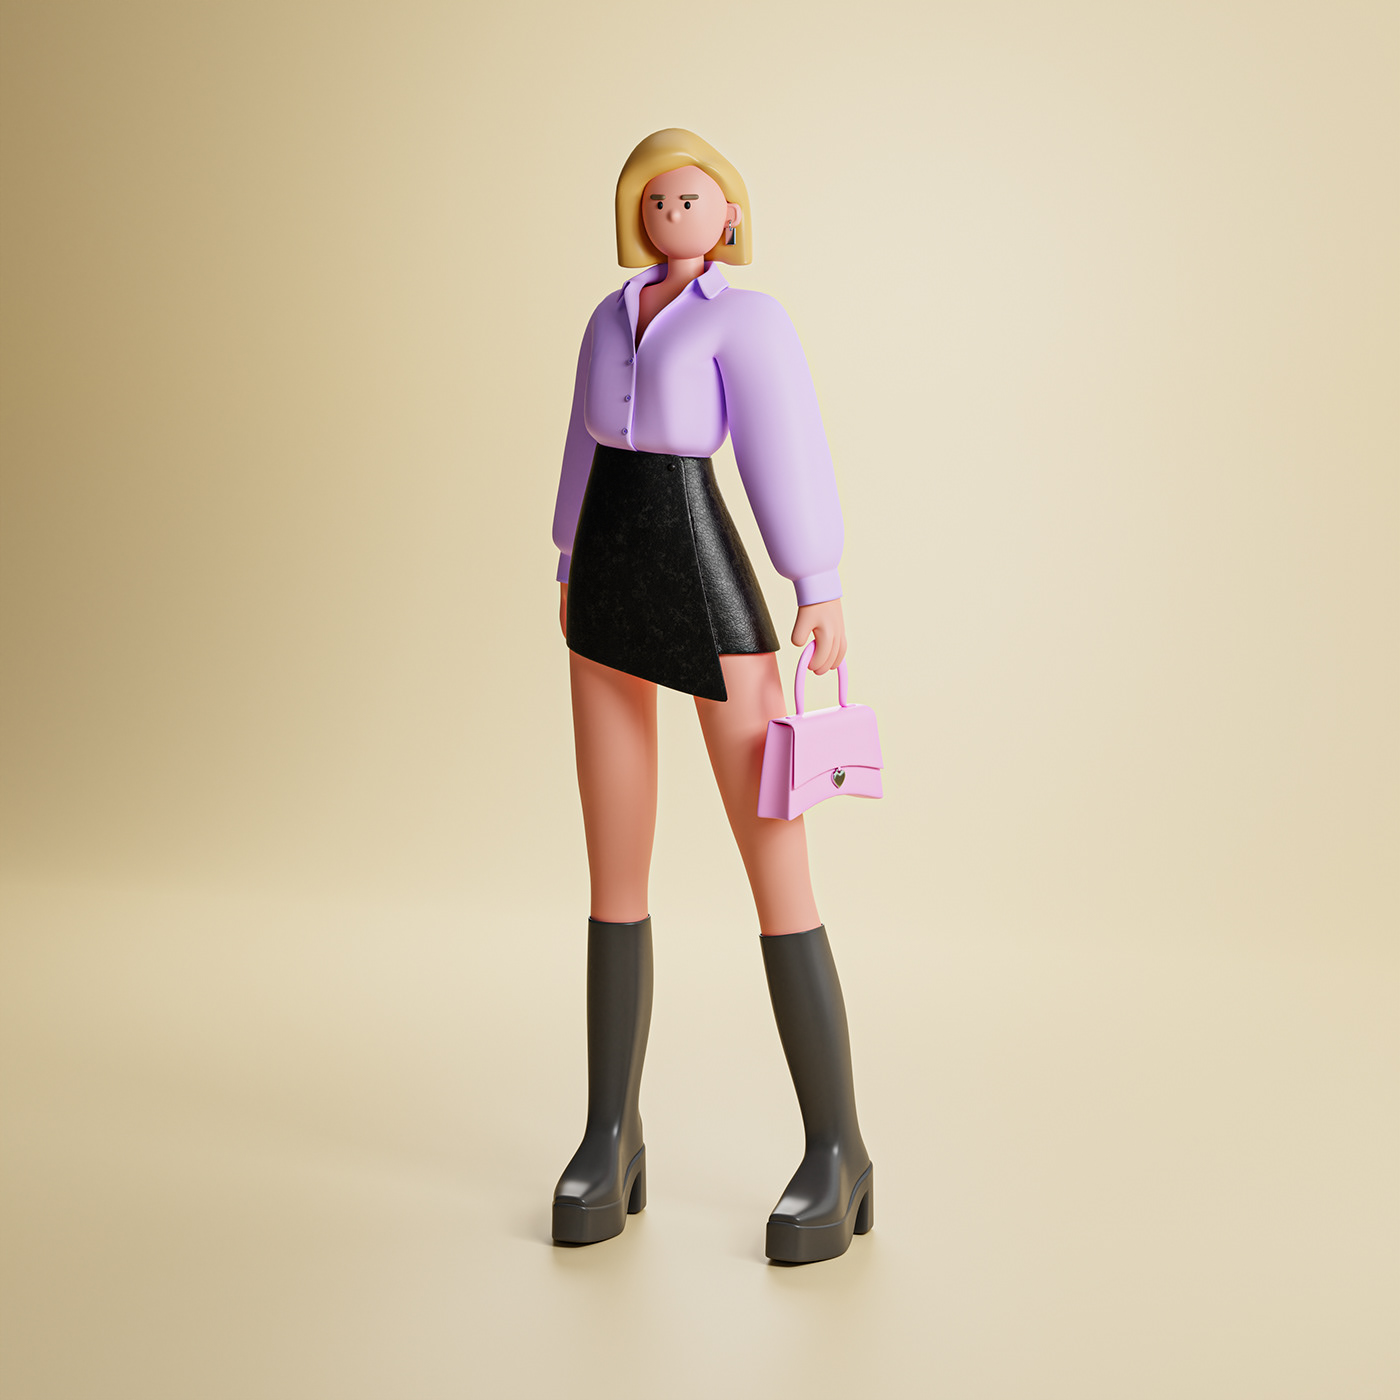 3D 3D Character 3D illustration 3d modeling blender Character design  Digital Art  Fashion  ILLUSTRATION  illustrations